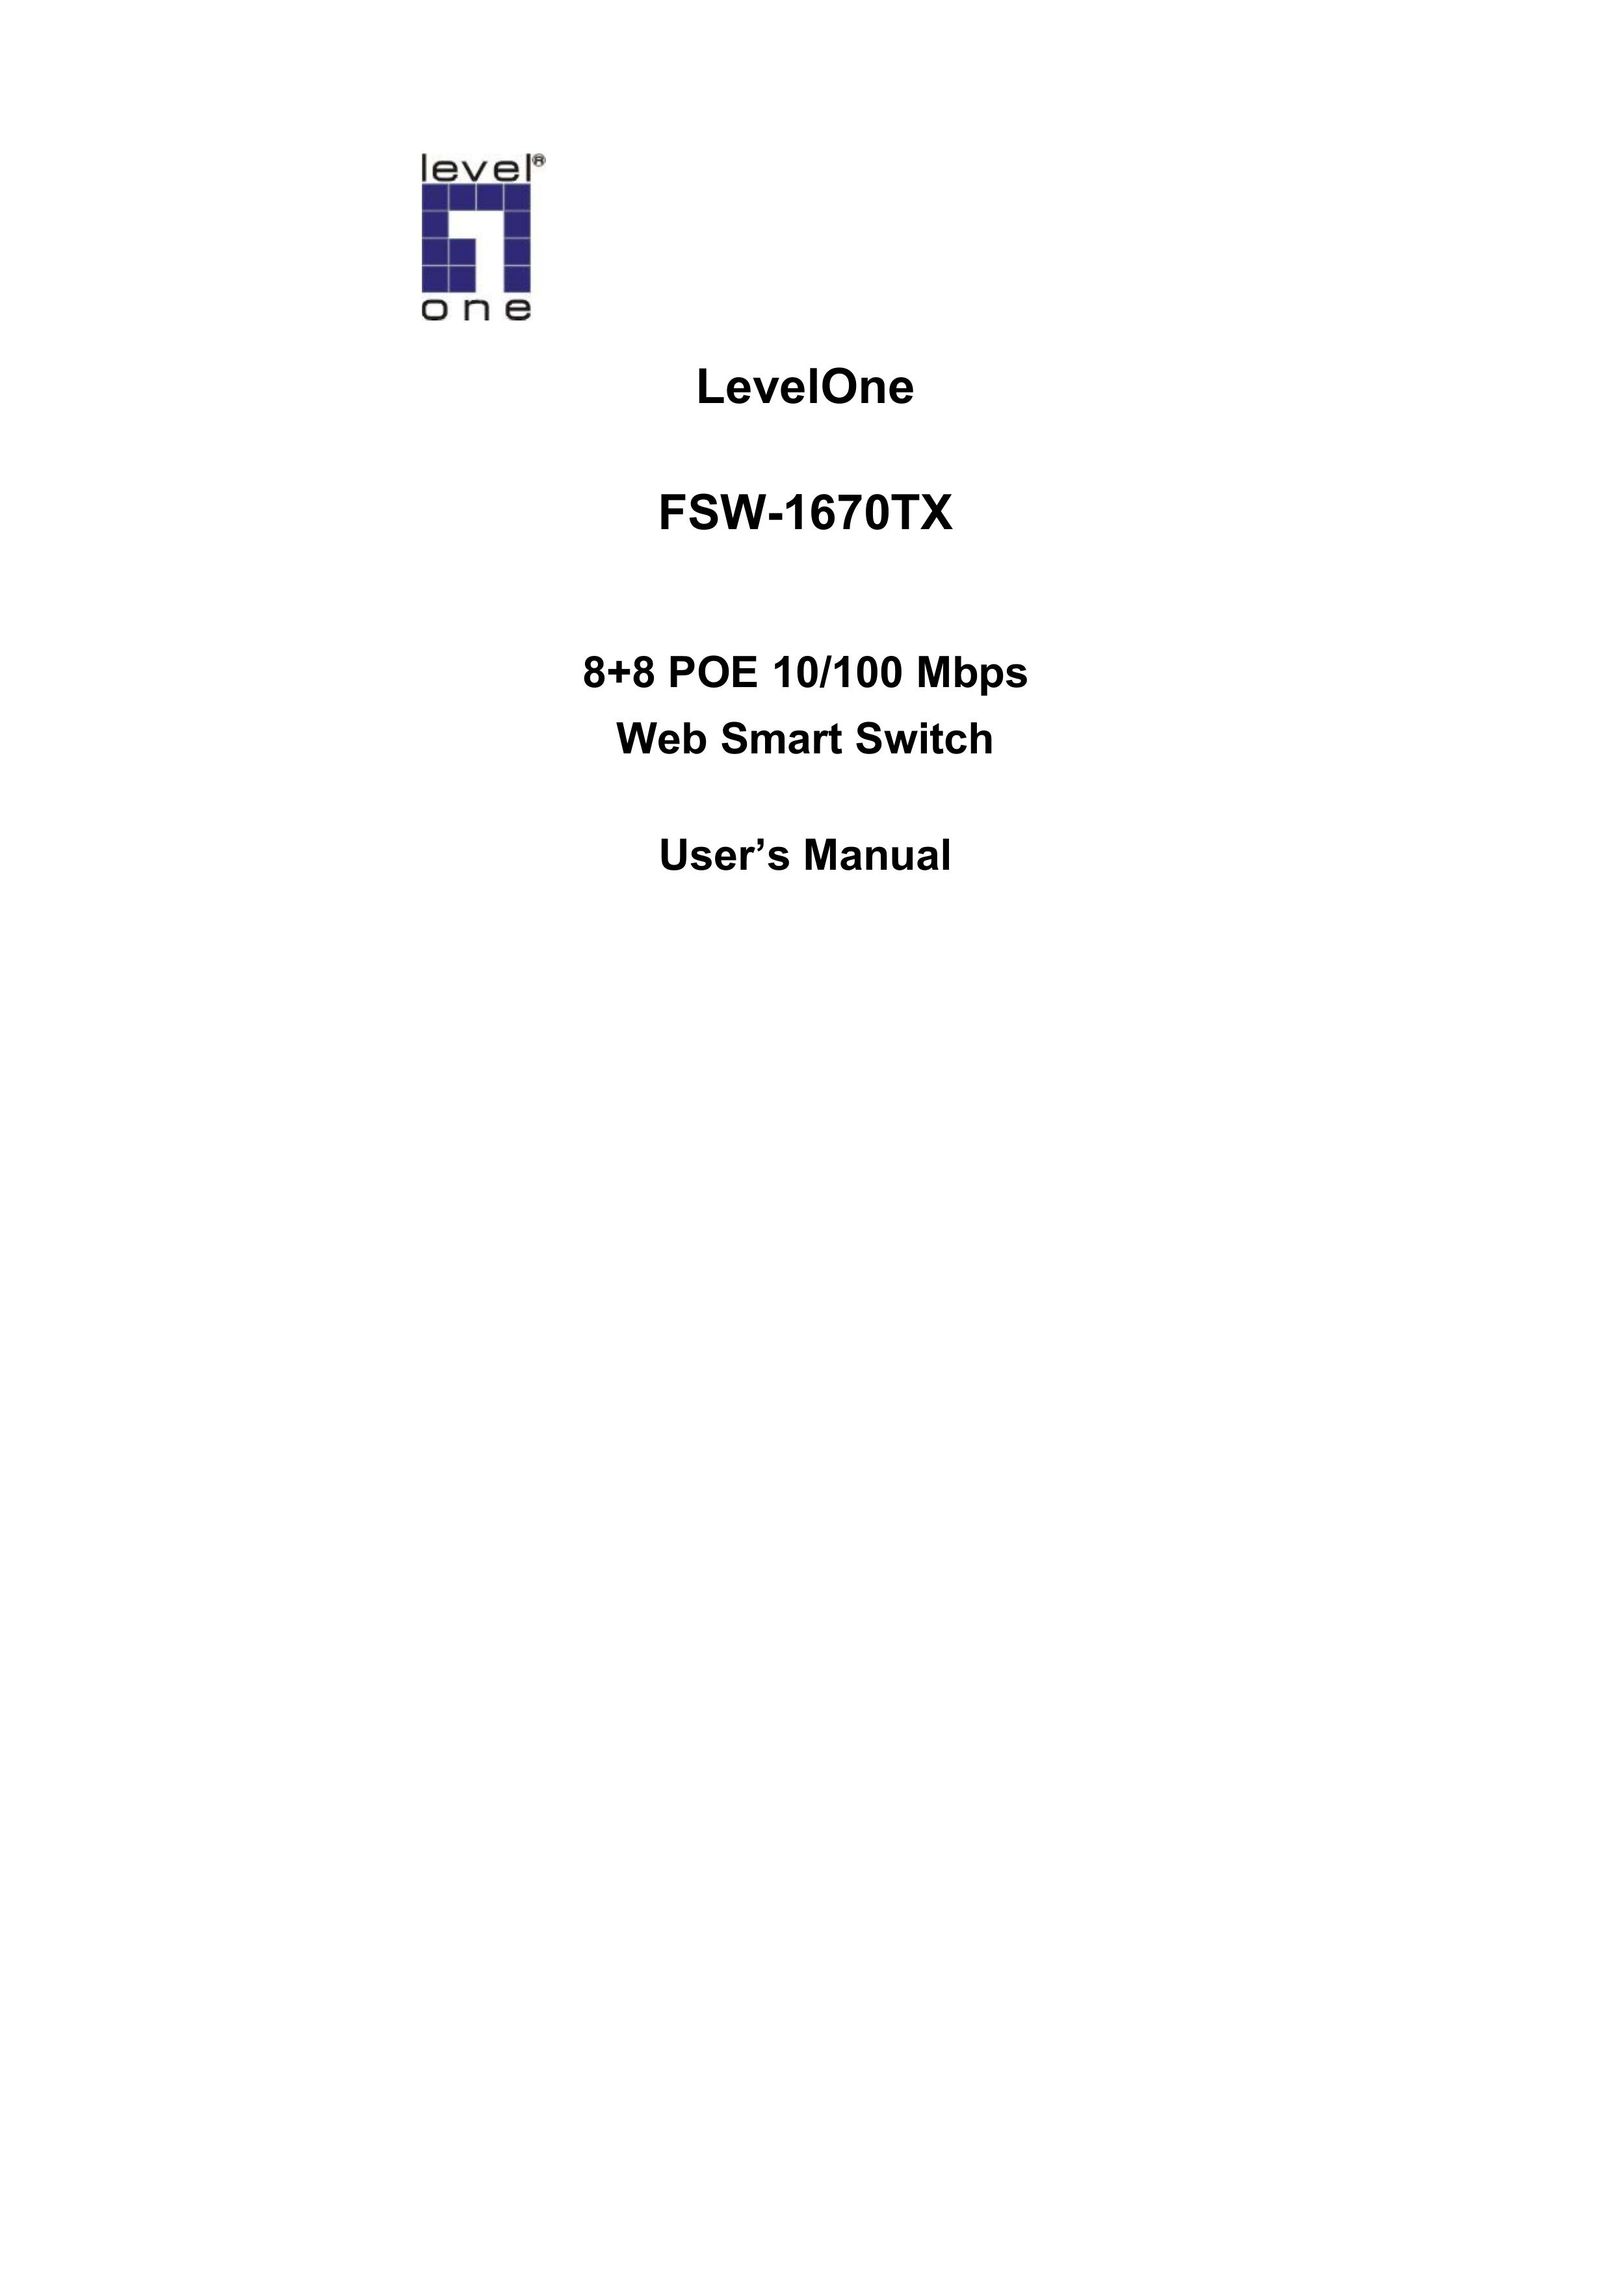 LevelOne LevelOne 8+8 POE 10/100 Mbps Web Smart Switch Network Hardware User Manual